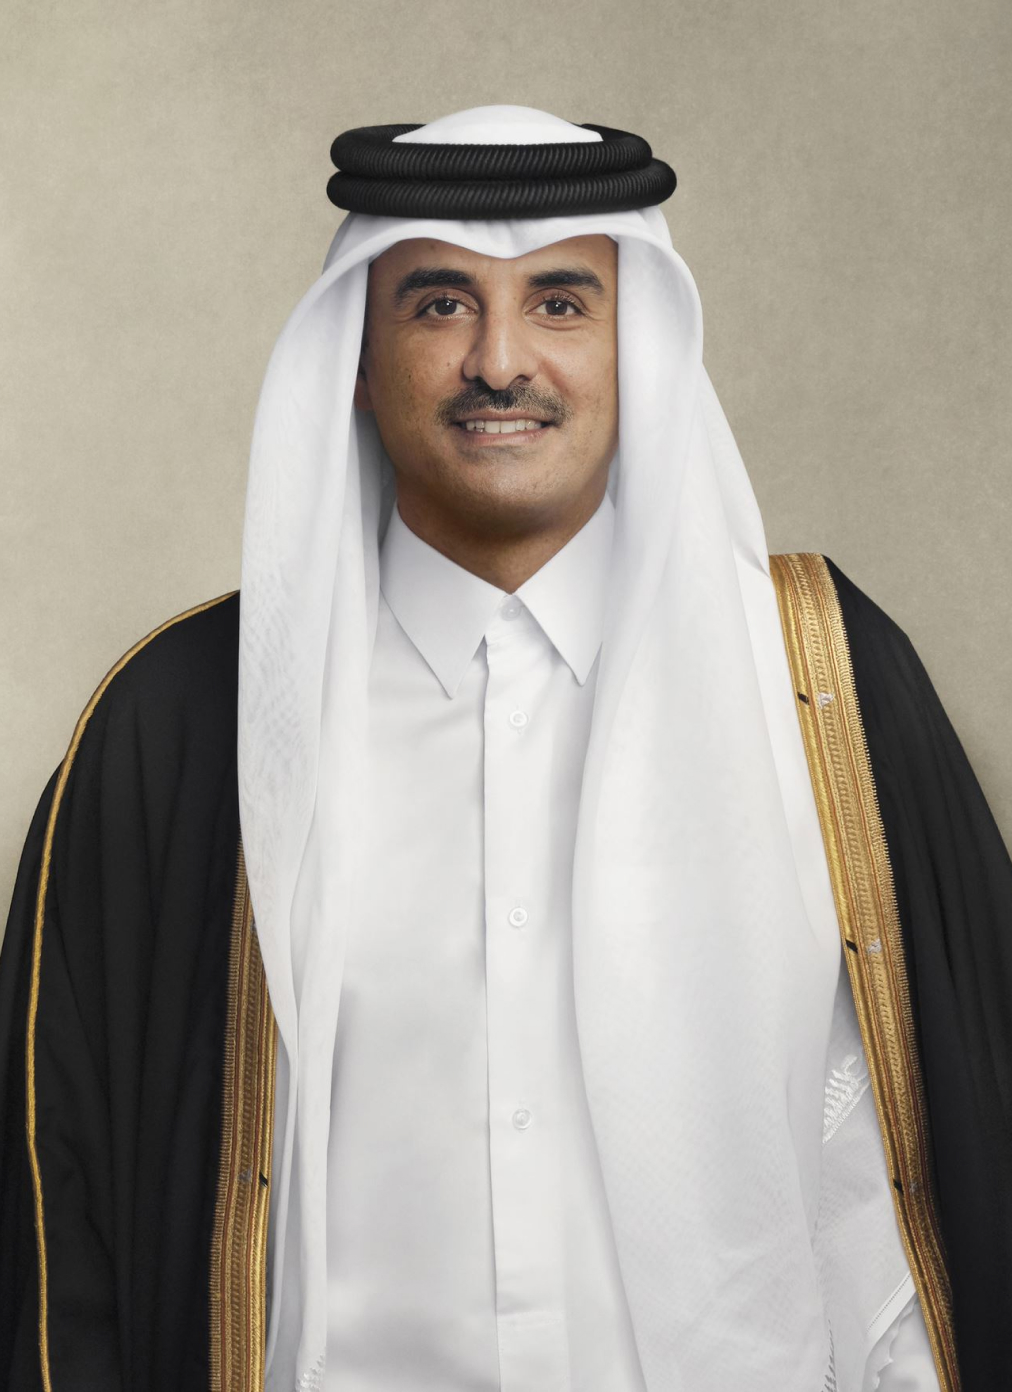 His Highness Sheikh Tamim Bin Hamad Al Thani, the Amir of the State of Qatar